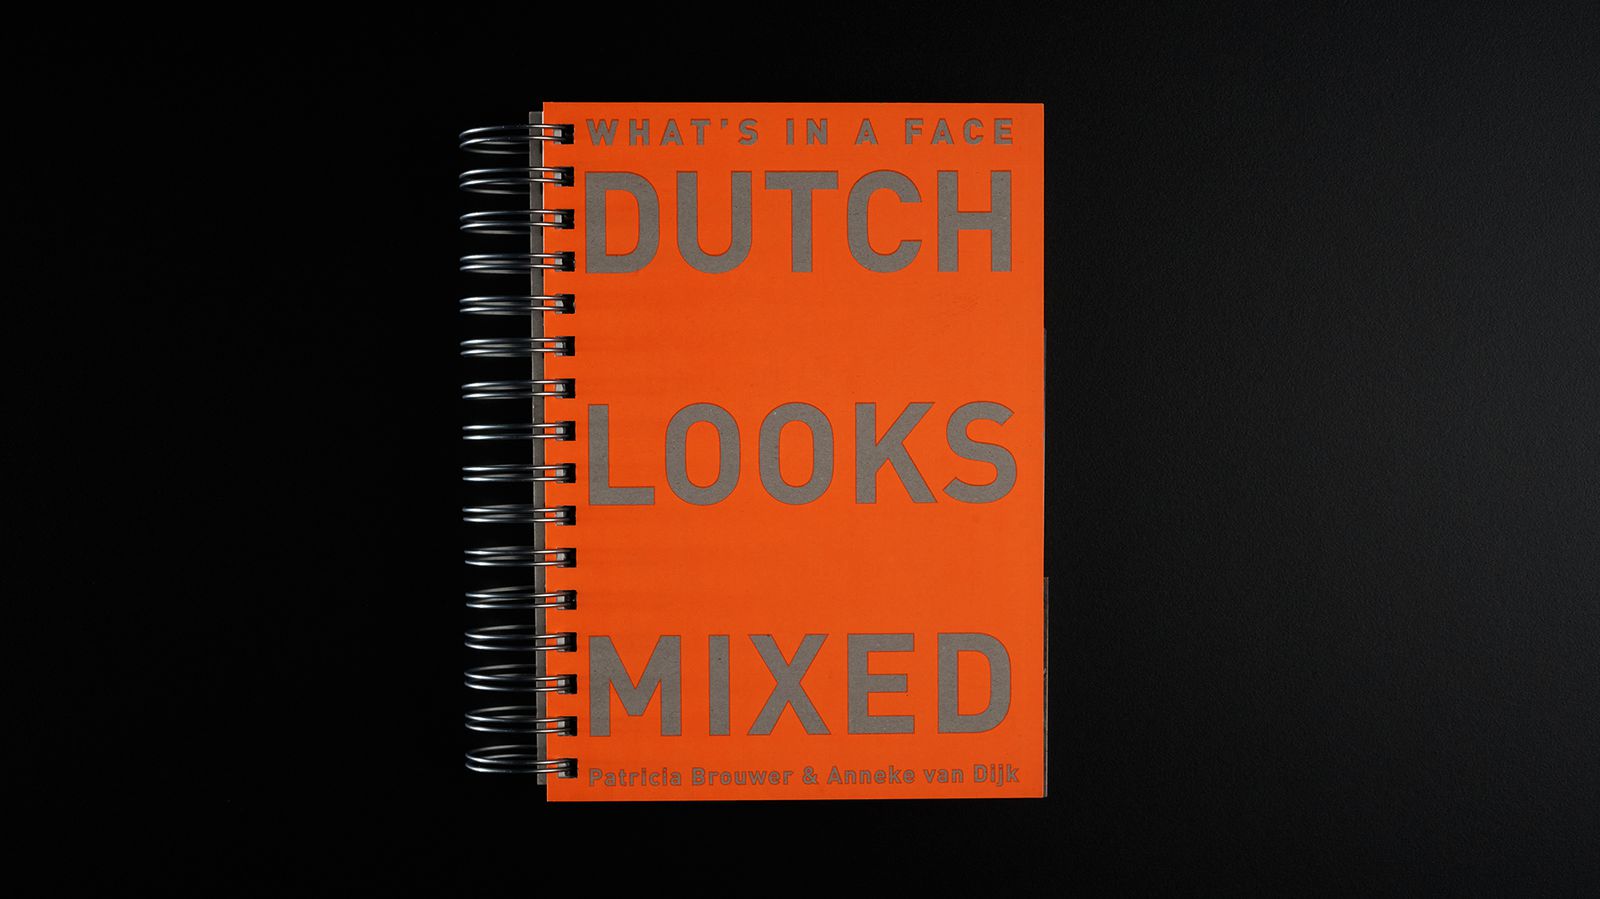 Dutch looks mixed - Cover.jpg